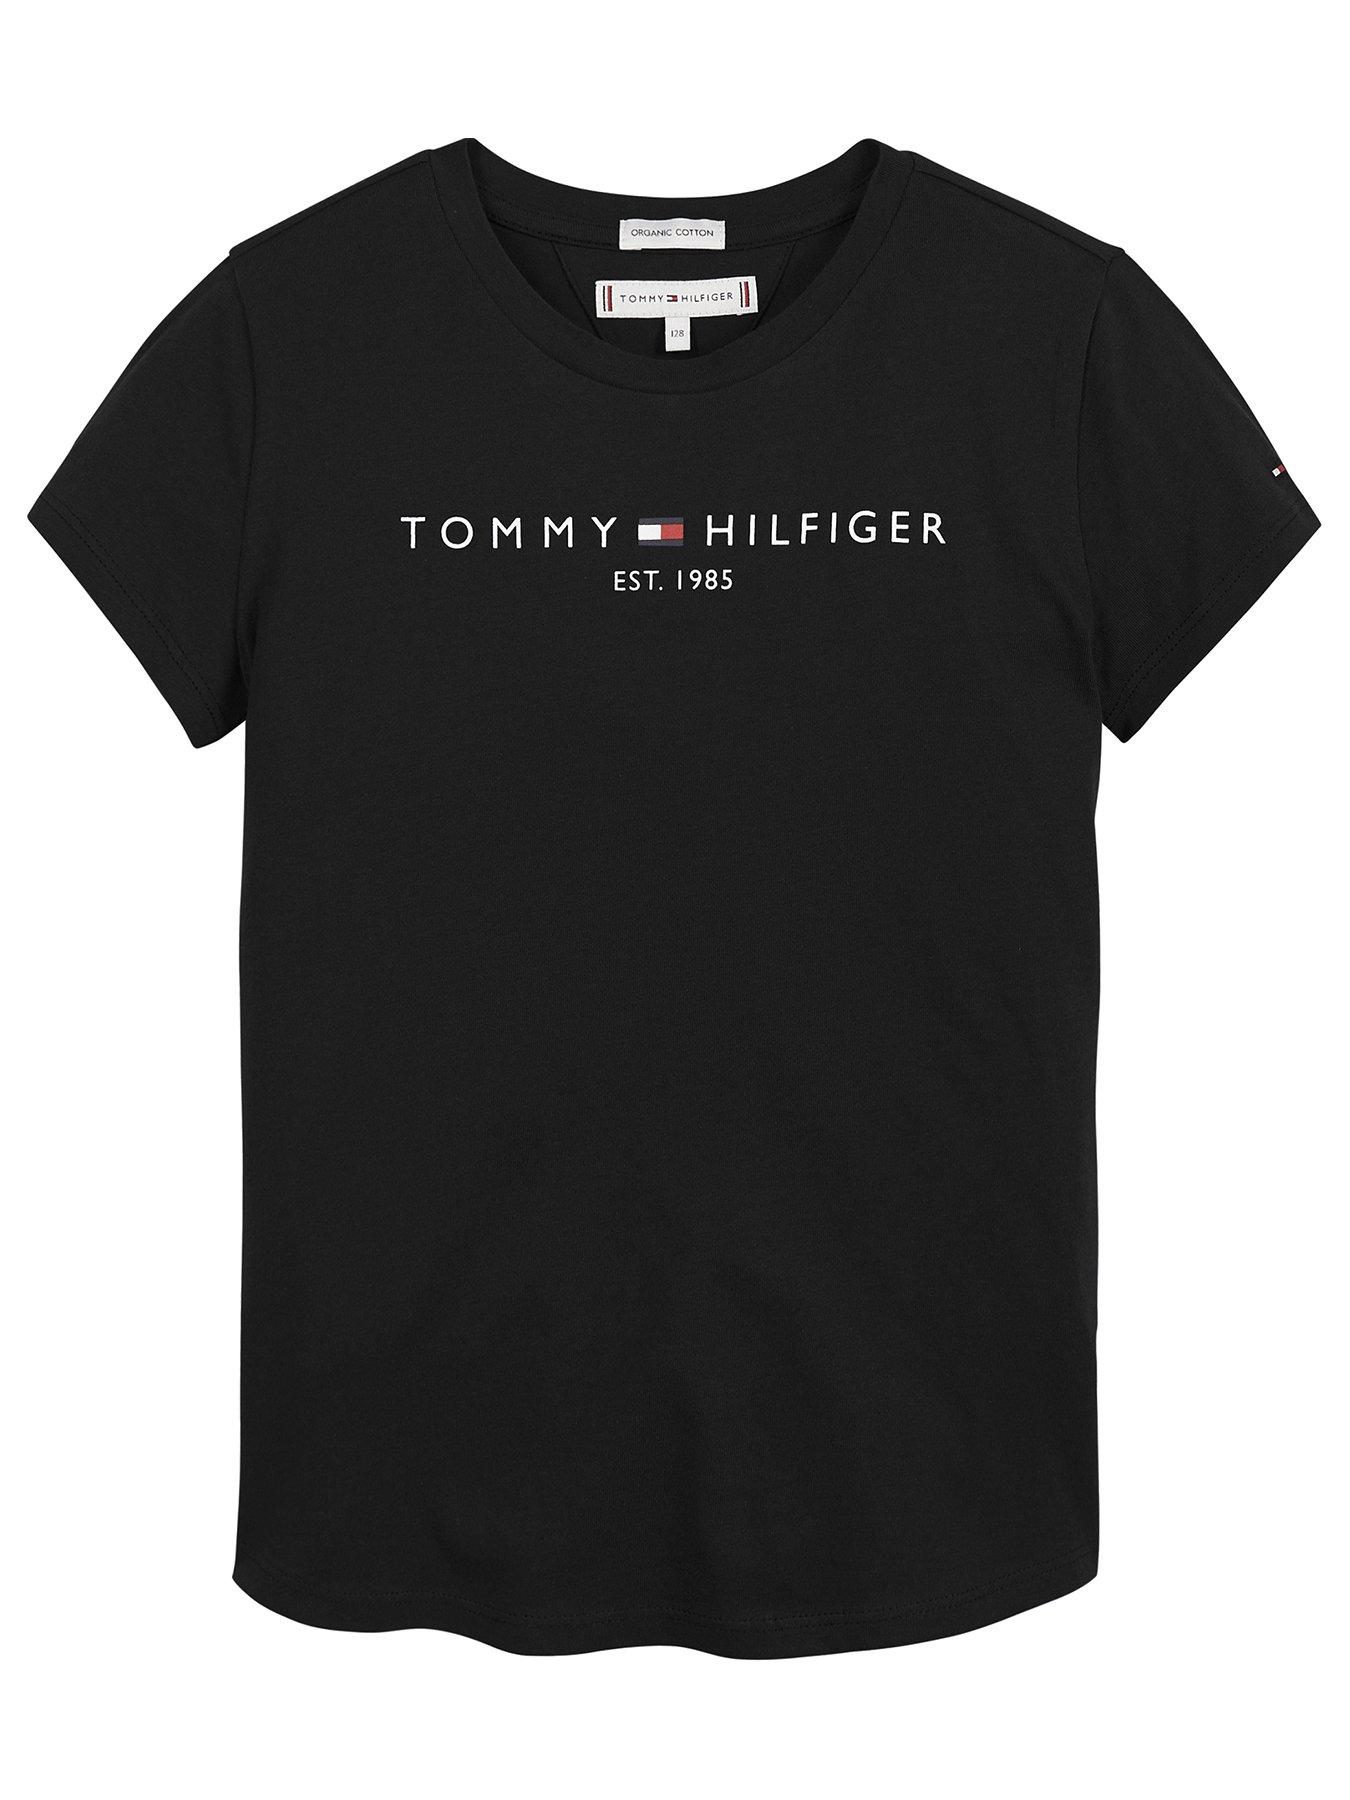 Tommy Hilfiger Rugby Stripe Boxy S/S Camiseta para Niños 